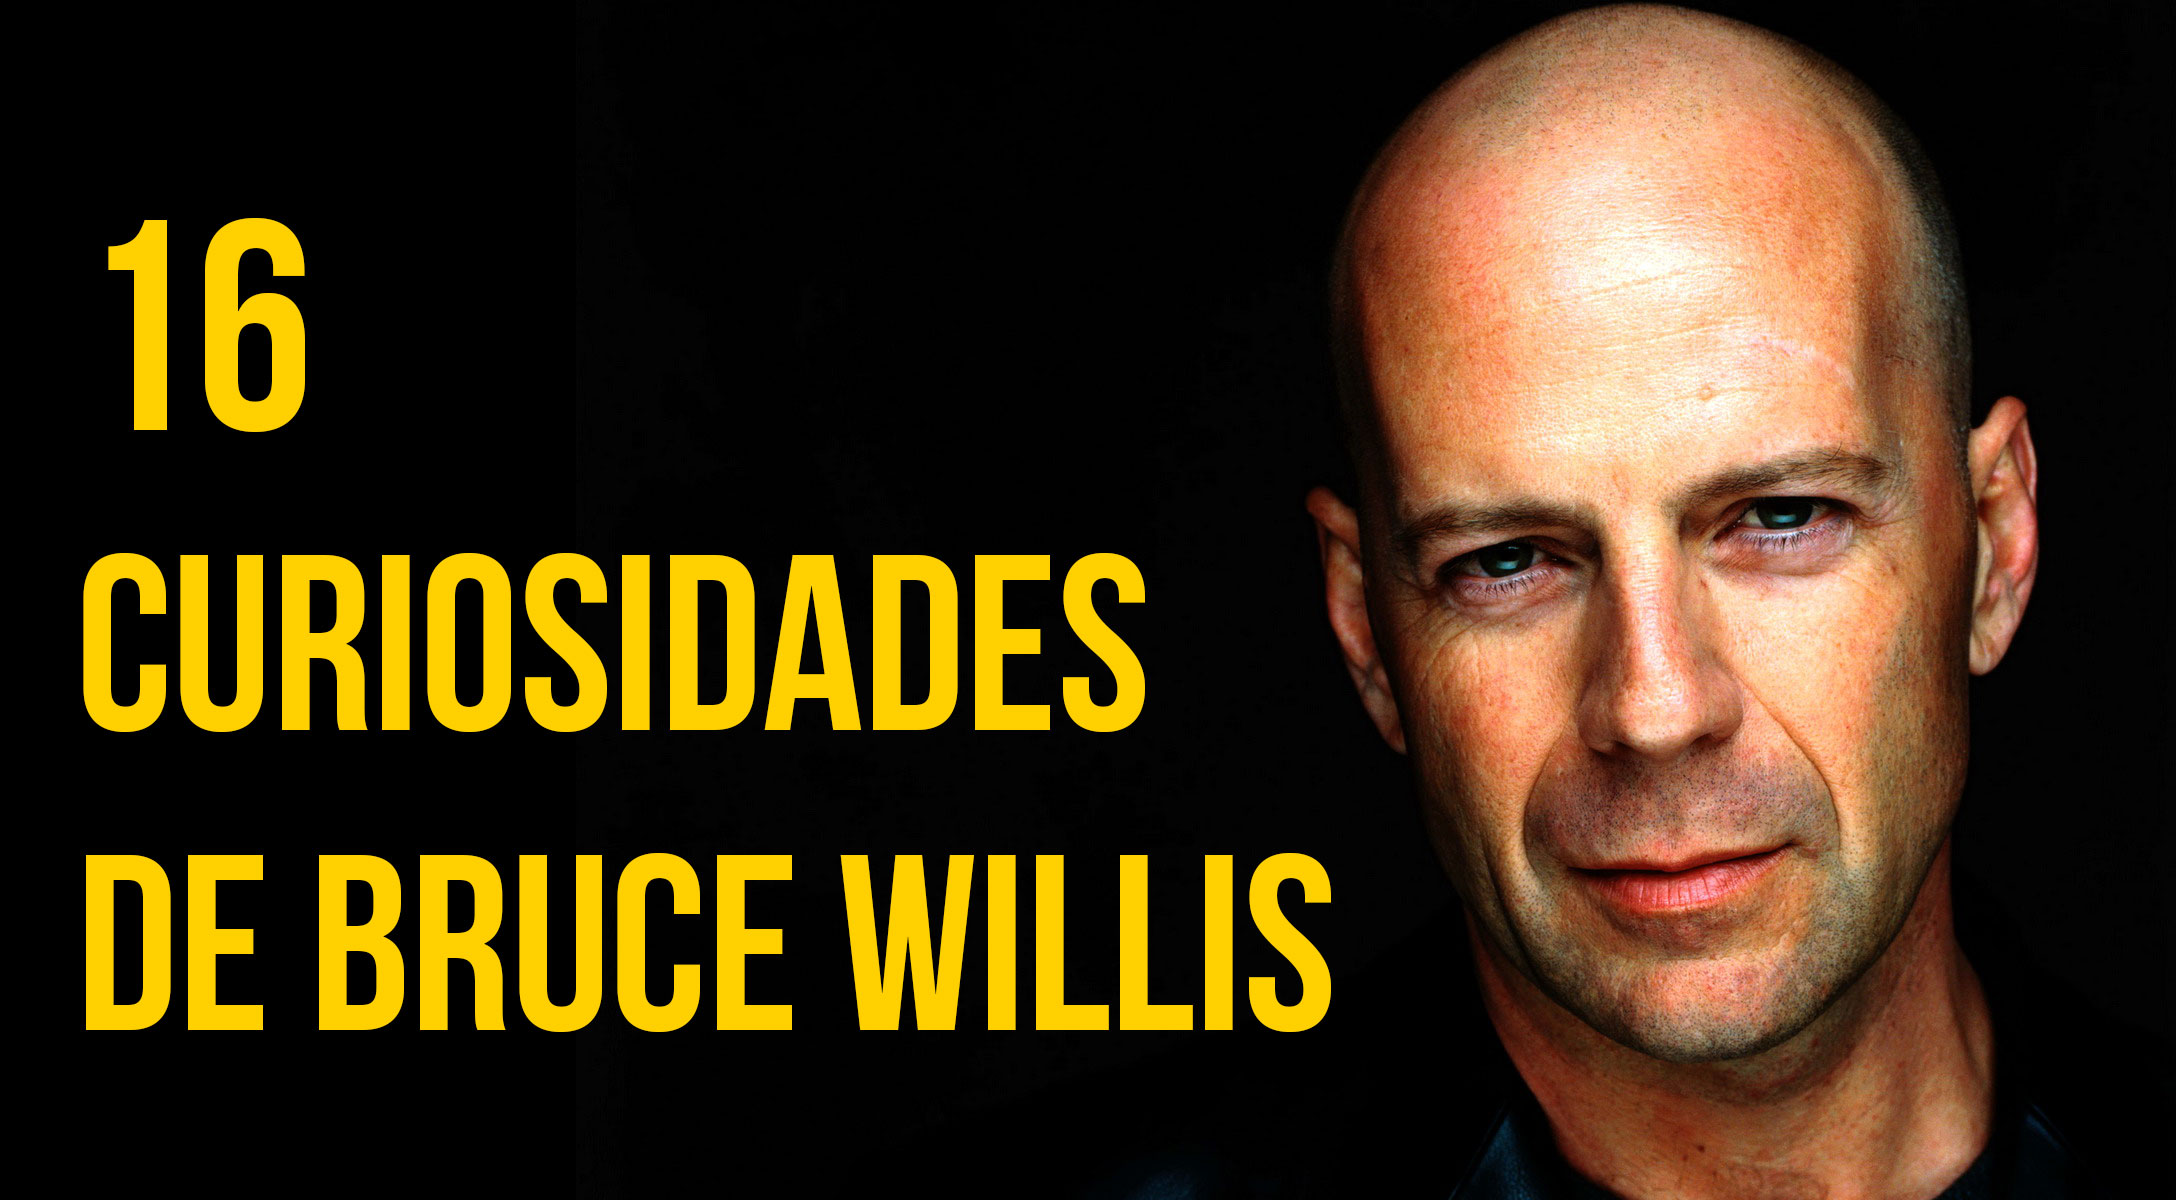 Galera 16 Curiosidades de Bruce Willis que probablemente